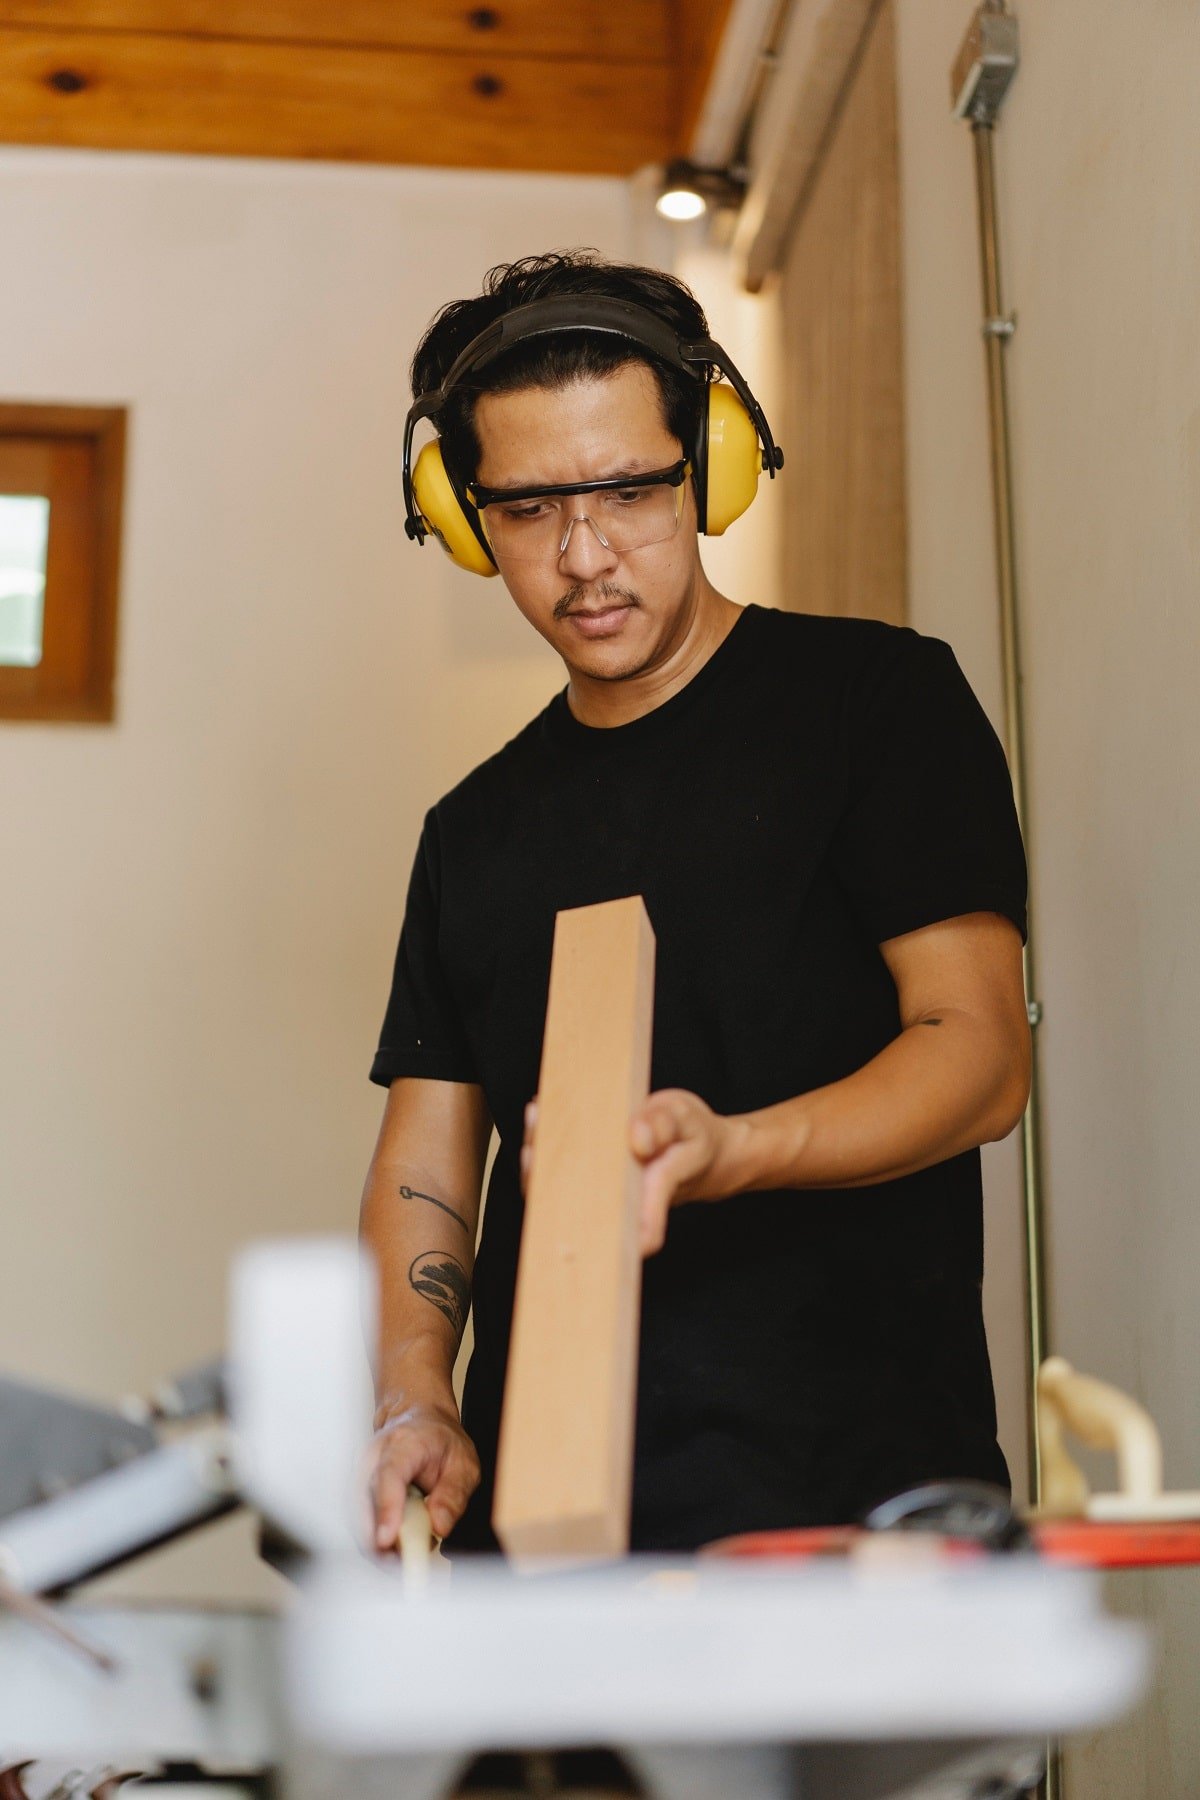 DIY Home Renovation Tips For The Modern Man